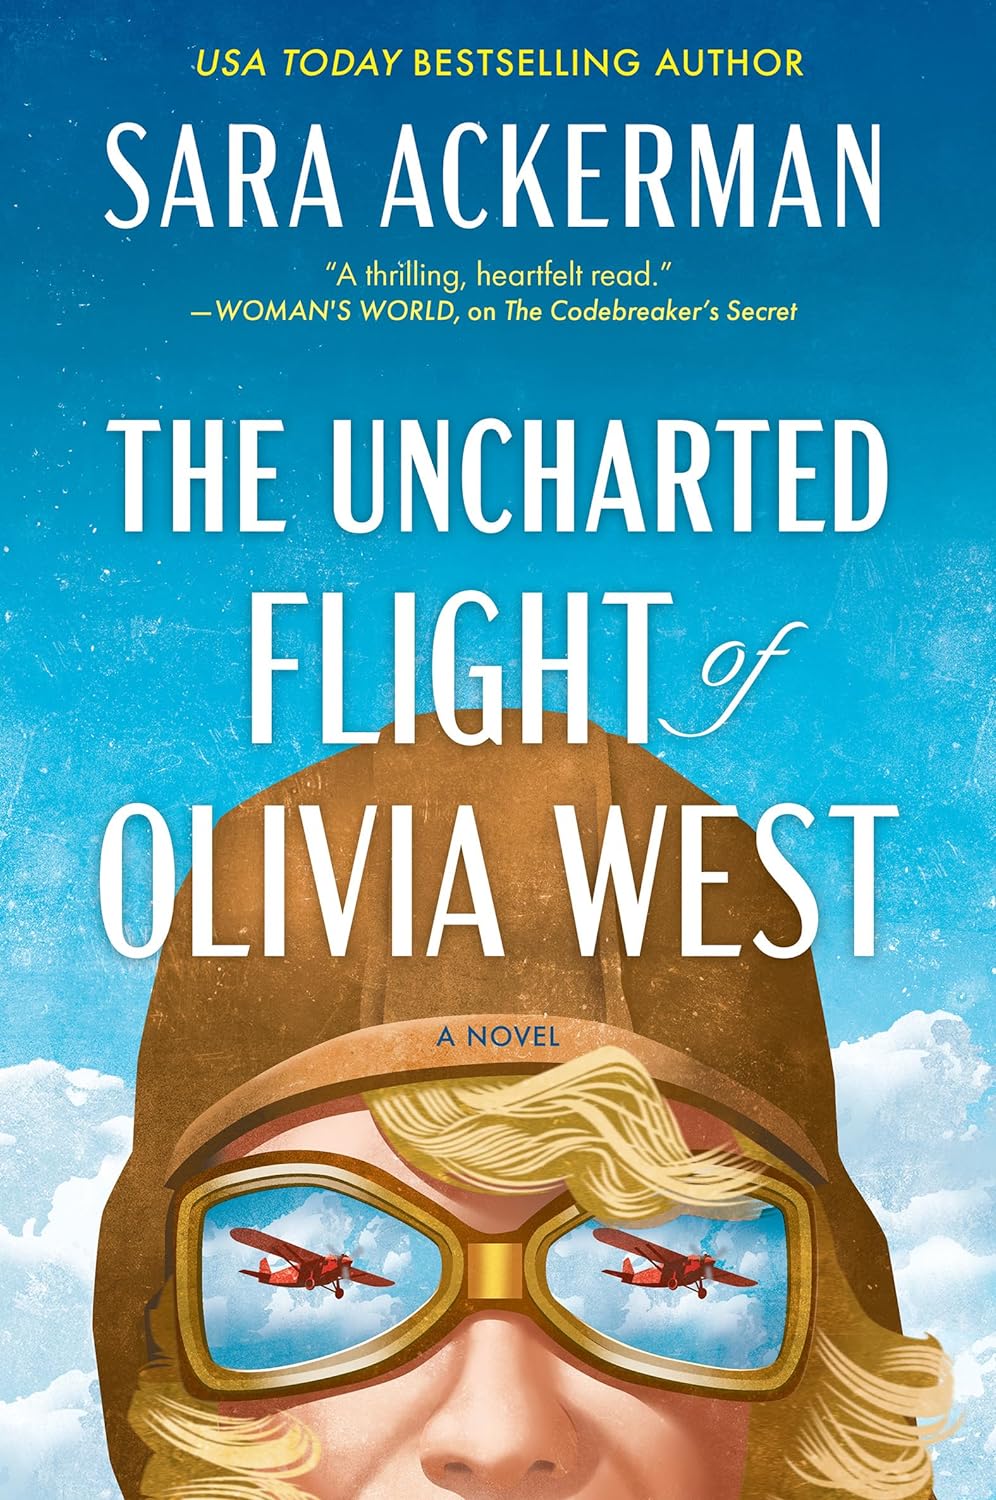 The Uncharted Flight of Olivia West [Sara Ackerman]